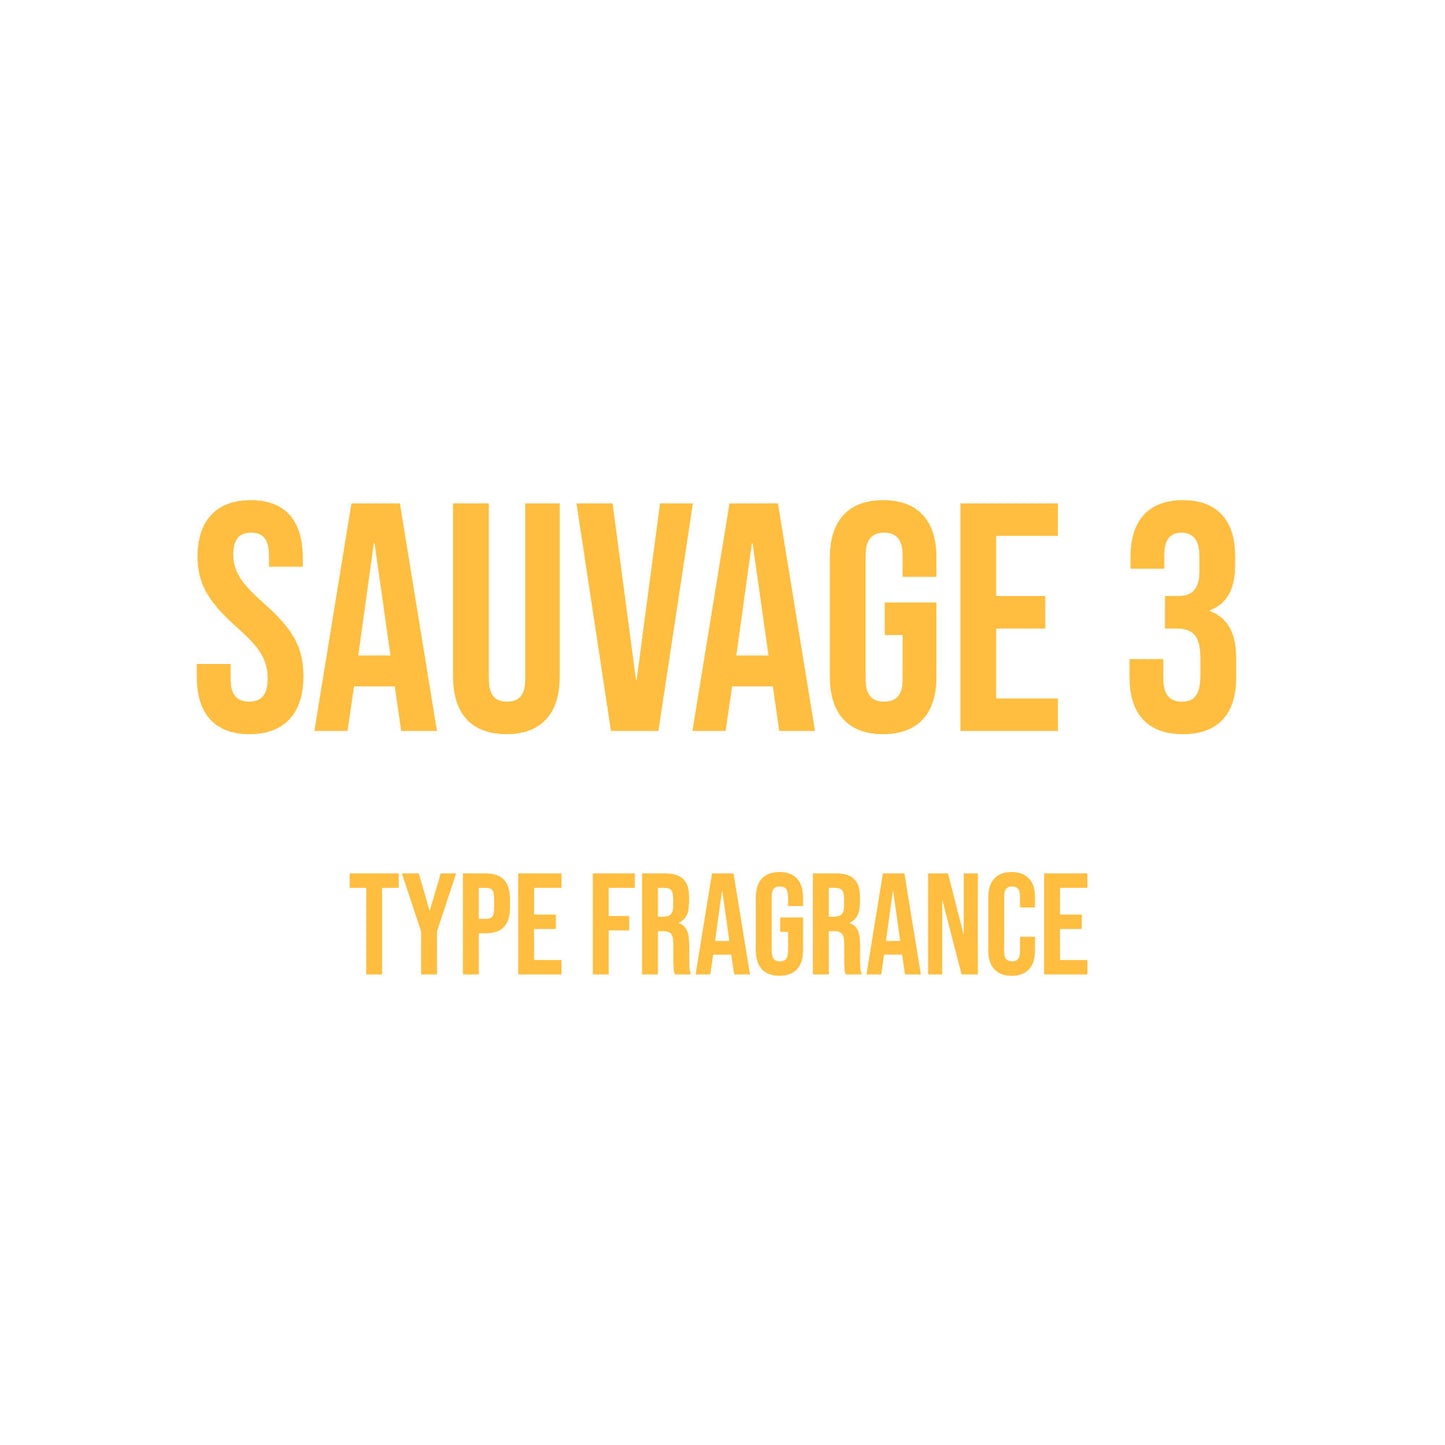 Sauvage 3 Type Fragrance